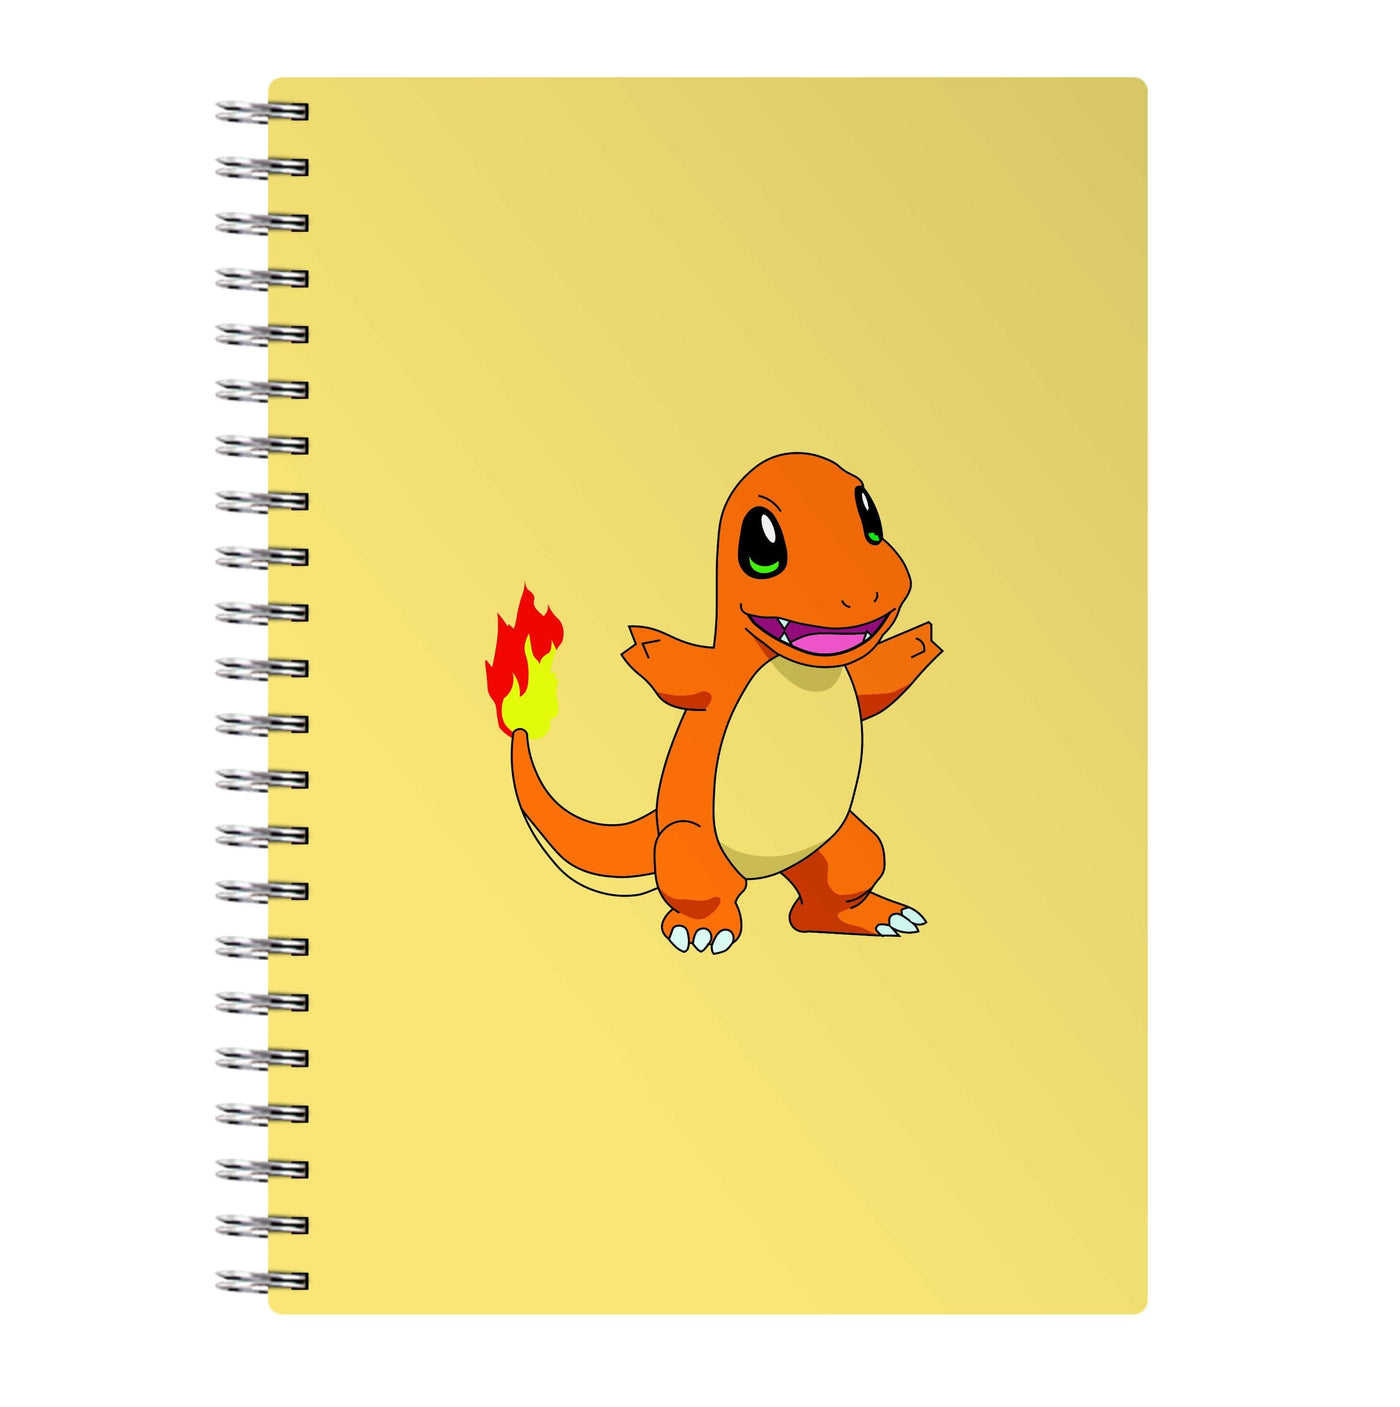 Charmander - Pokemon Notebook